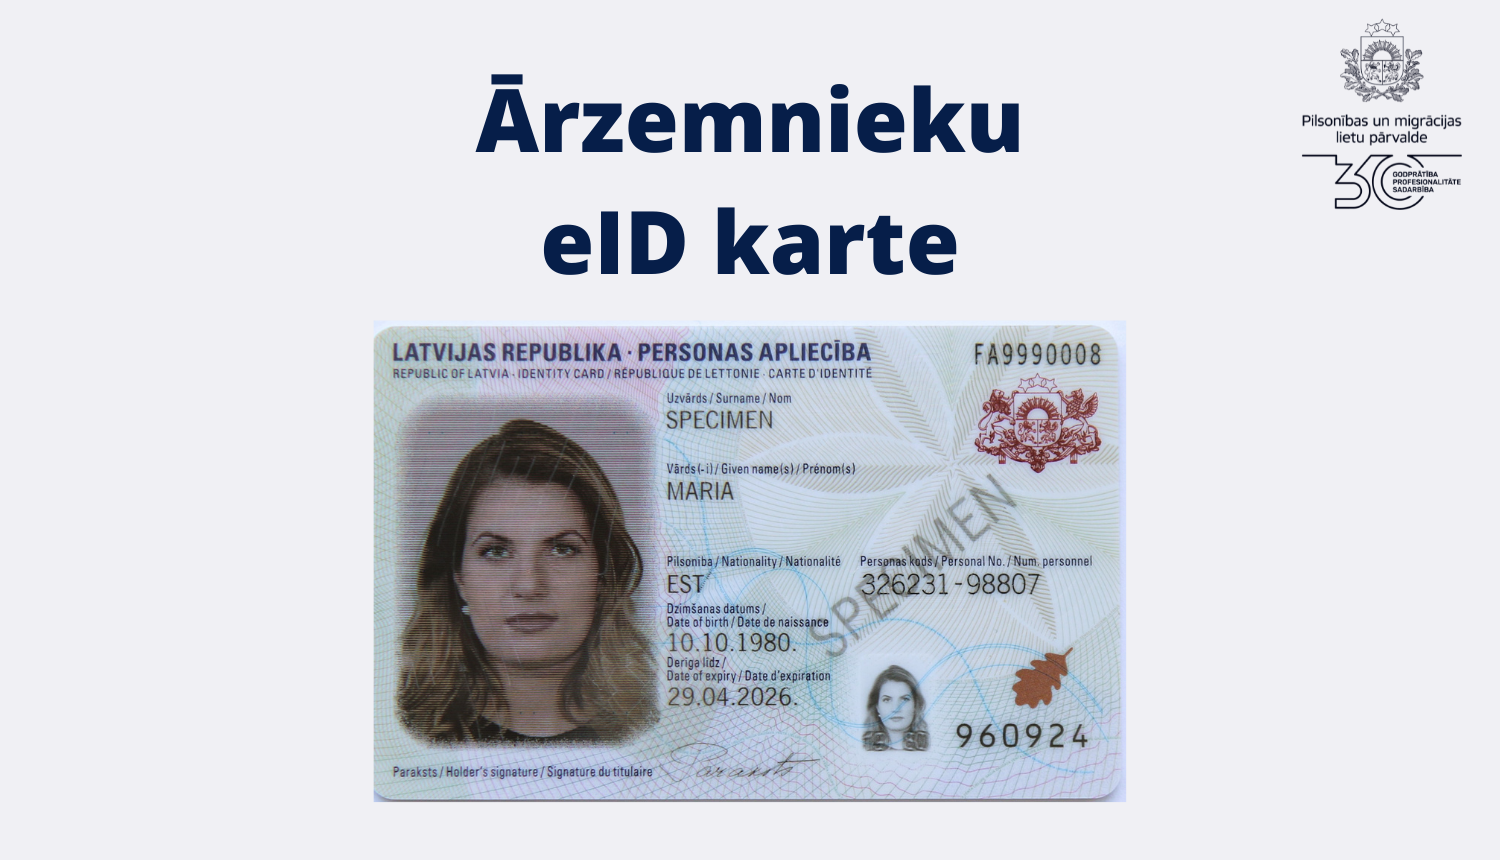 57 Latvian Identity Card Images, Stock Photos & Vectors